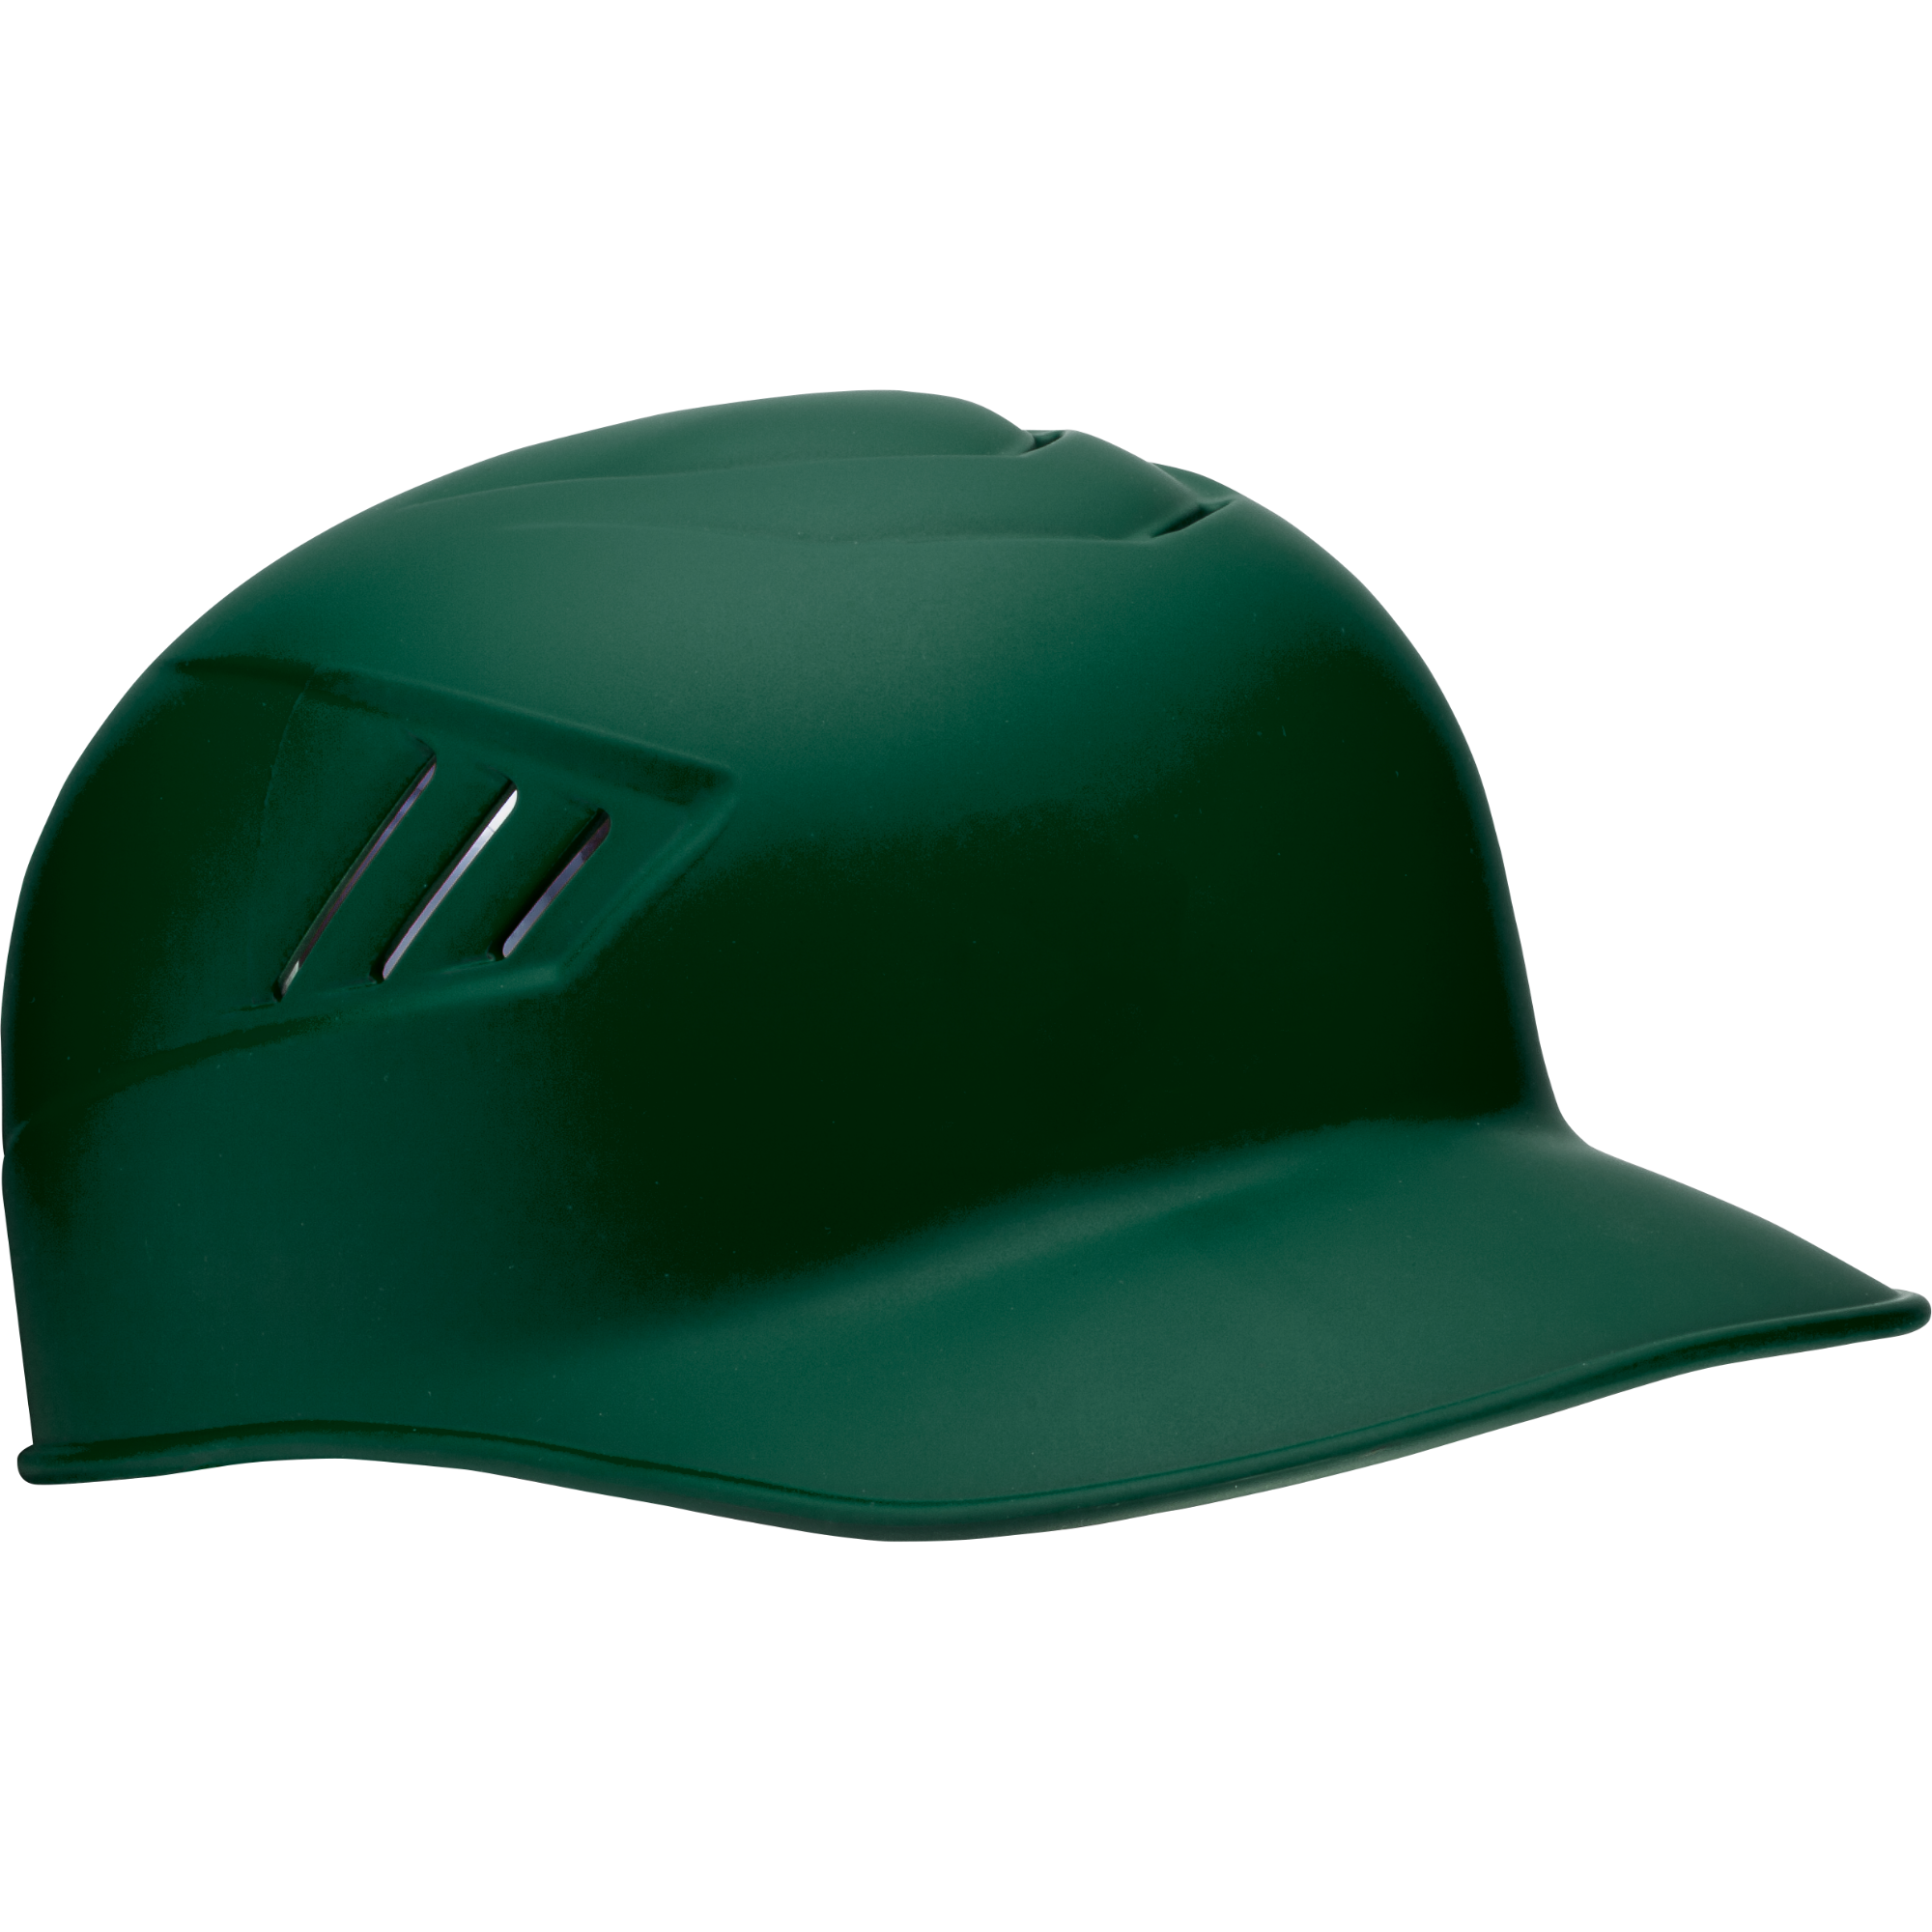 Rawlings Coolflo 1-Tone Catchers And Base Coach Skull Cap Helmet - Matte Dark Green